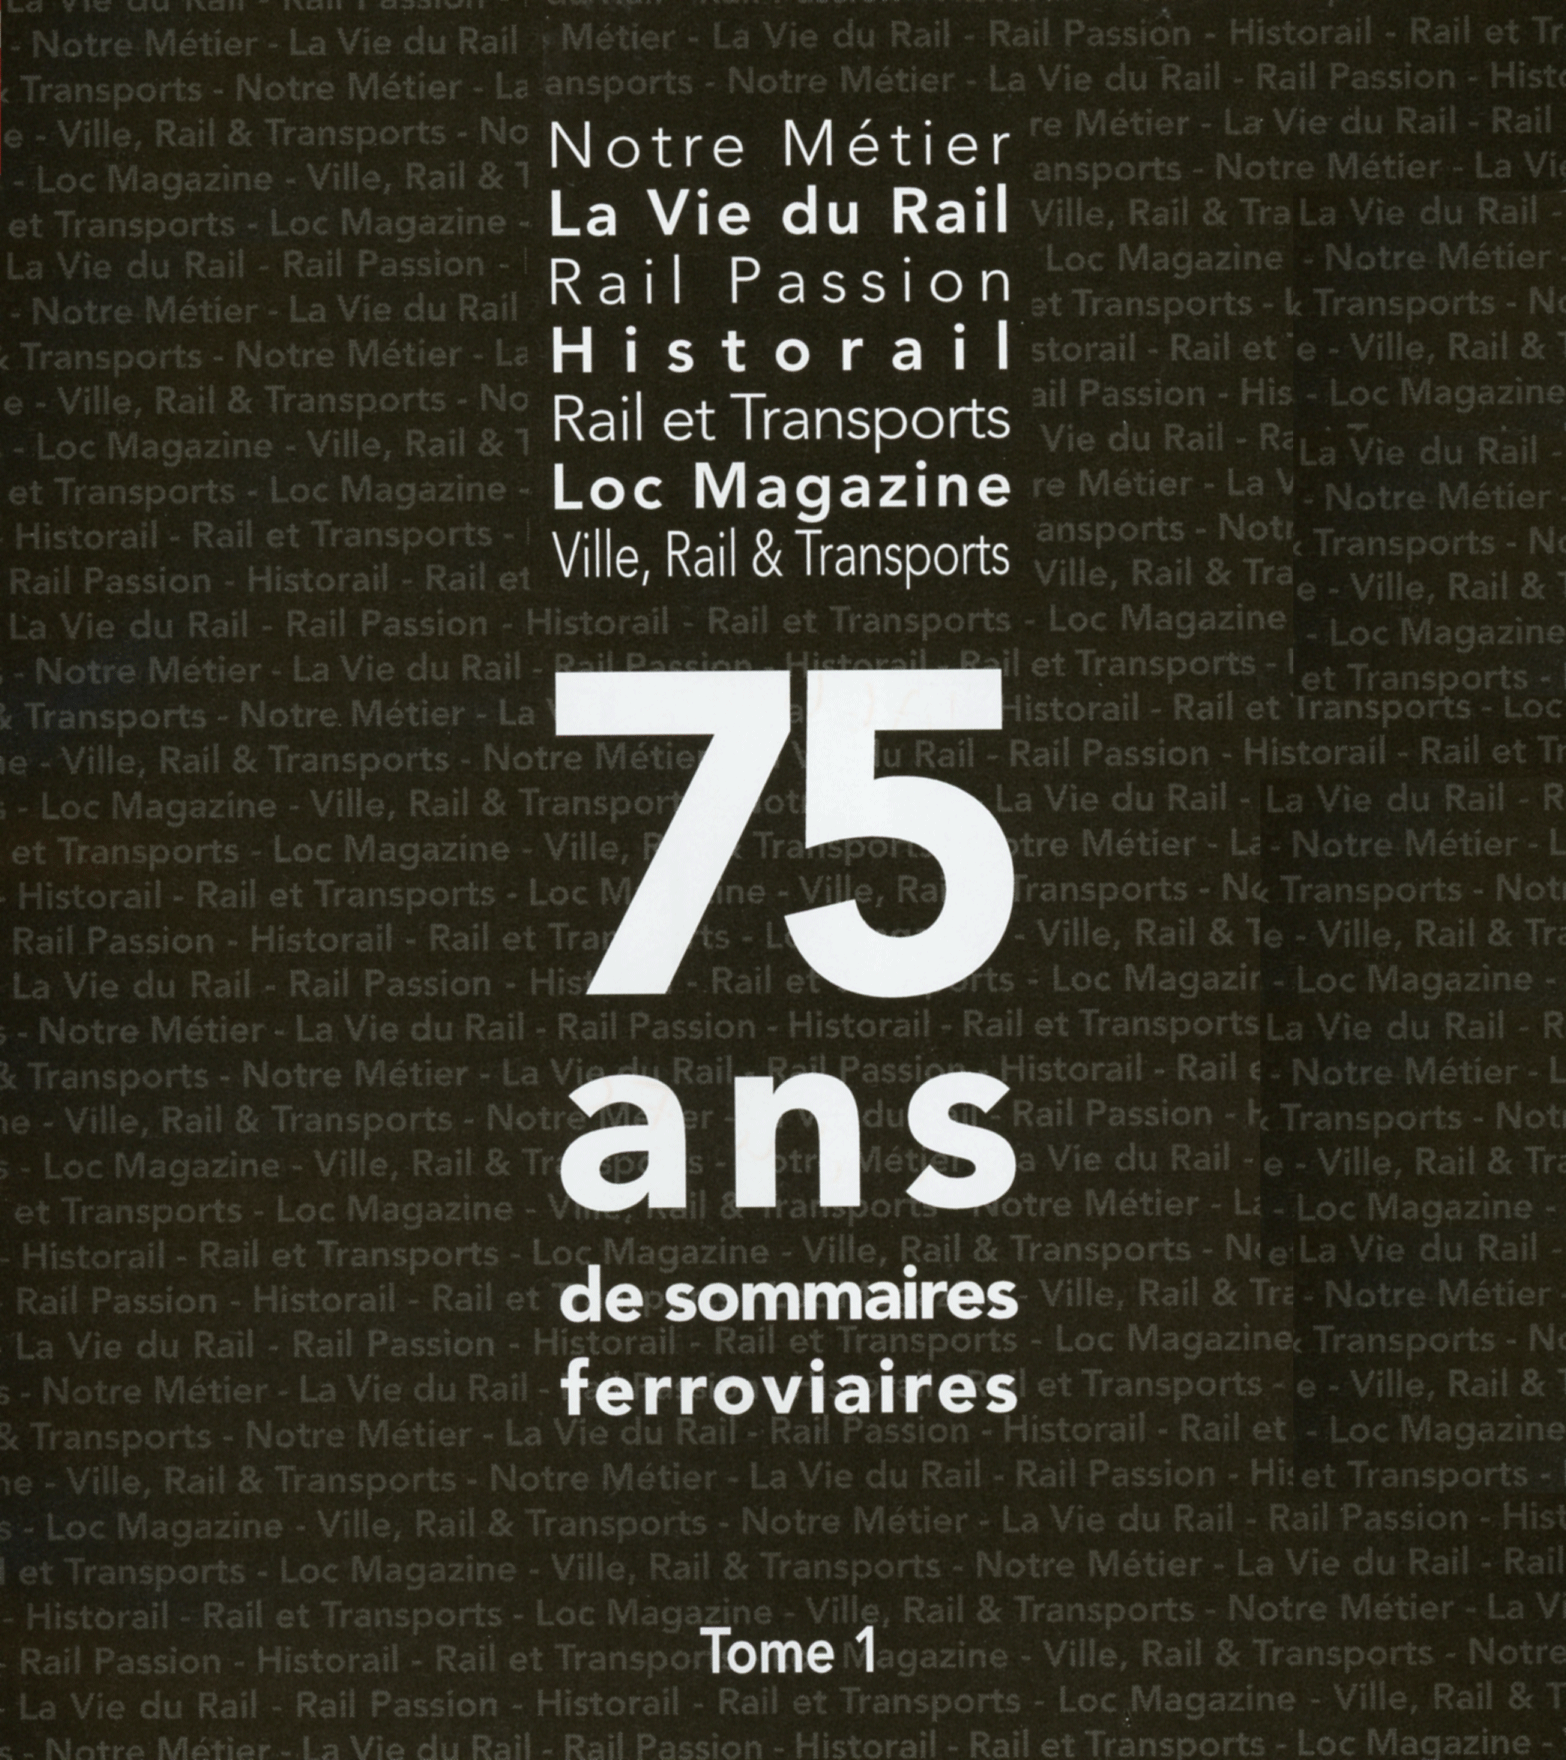 75 ans de sommaires ferroviaires (Tomes 1 - 2 - 3)